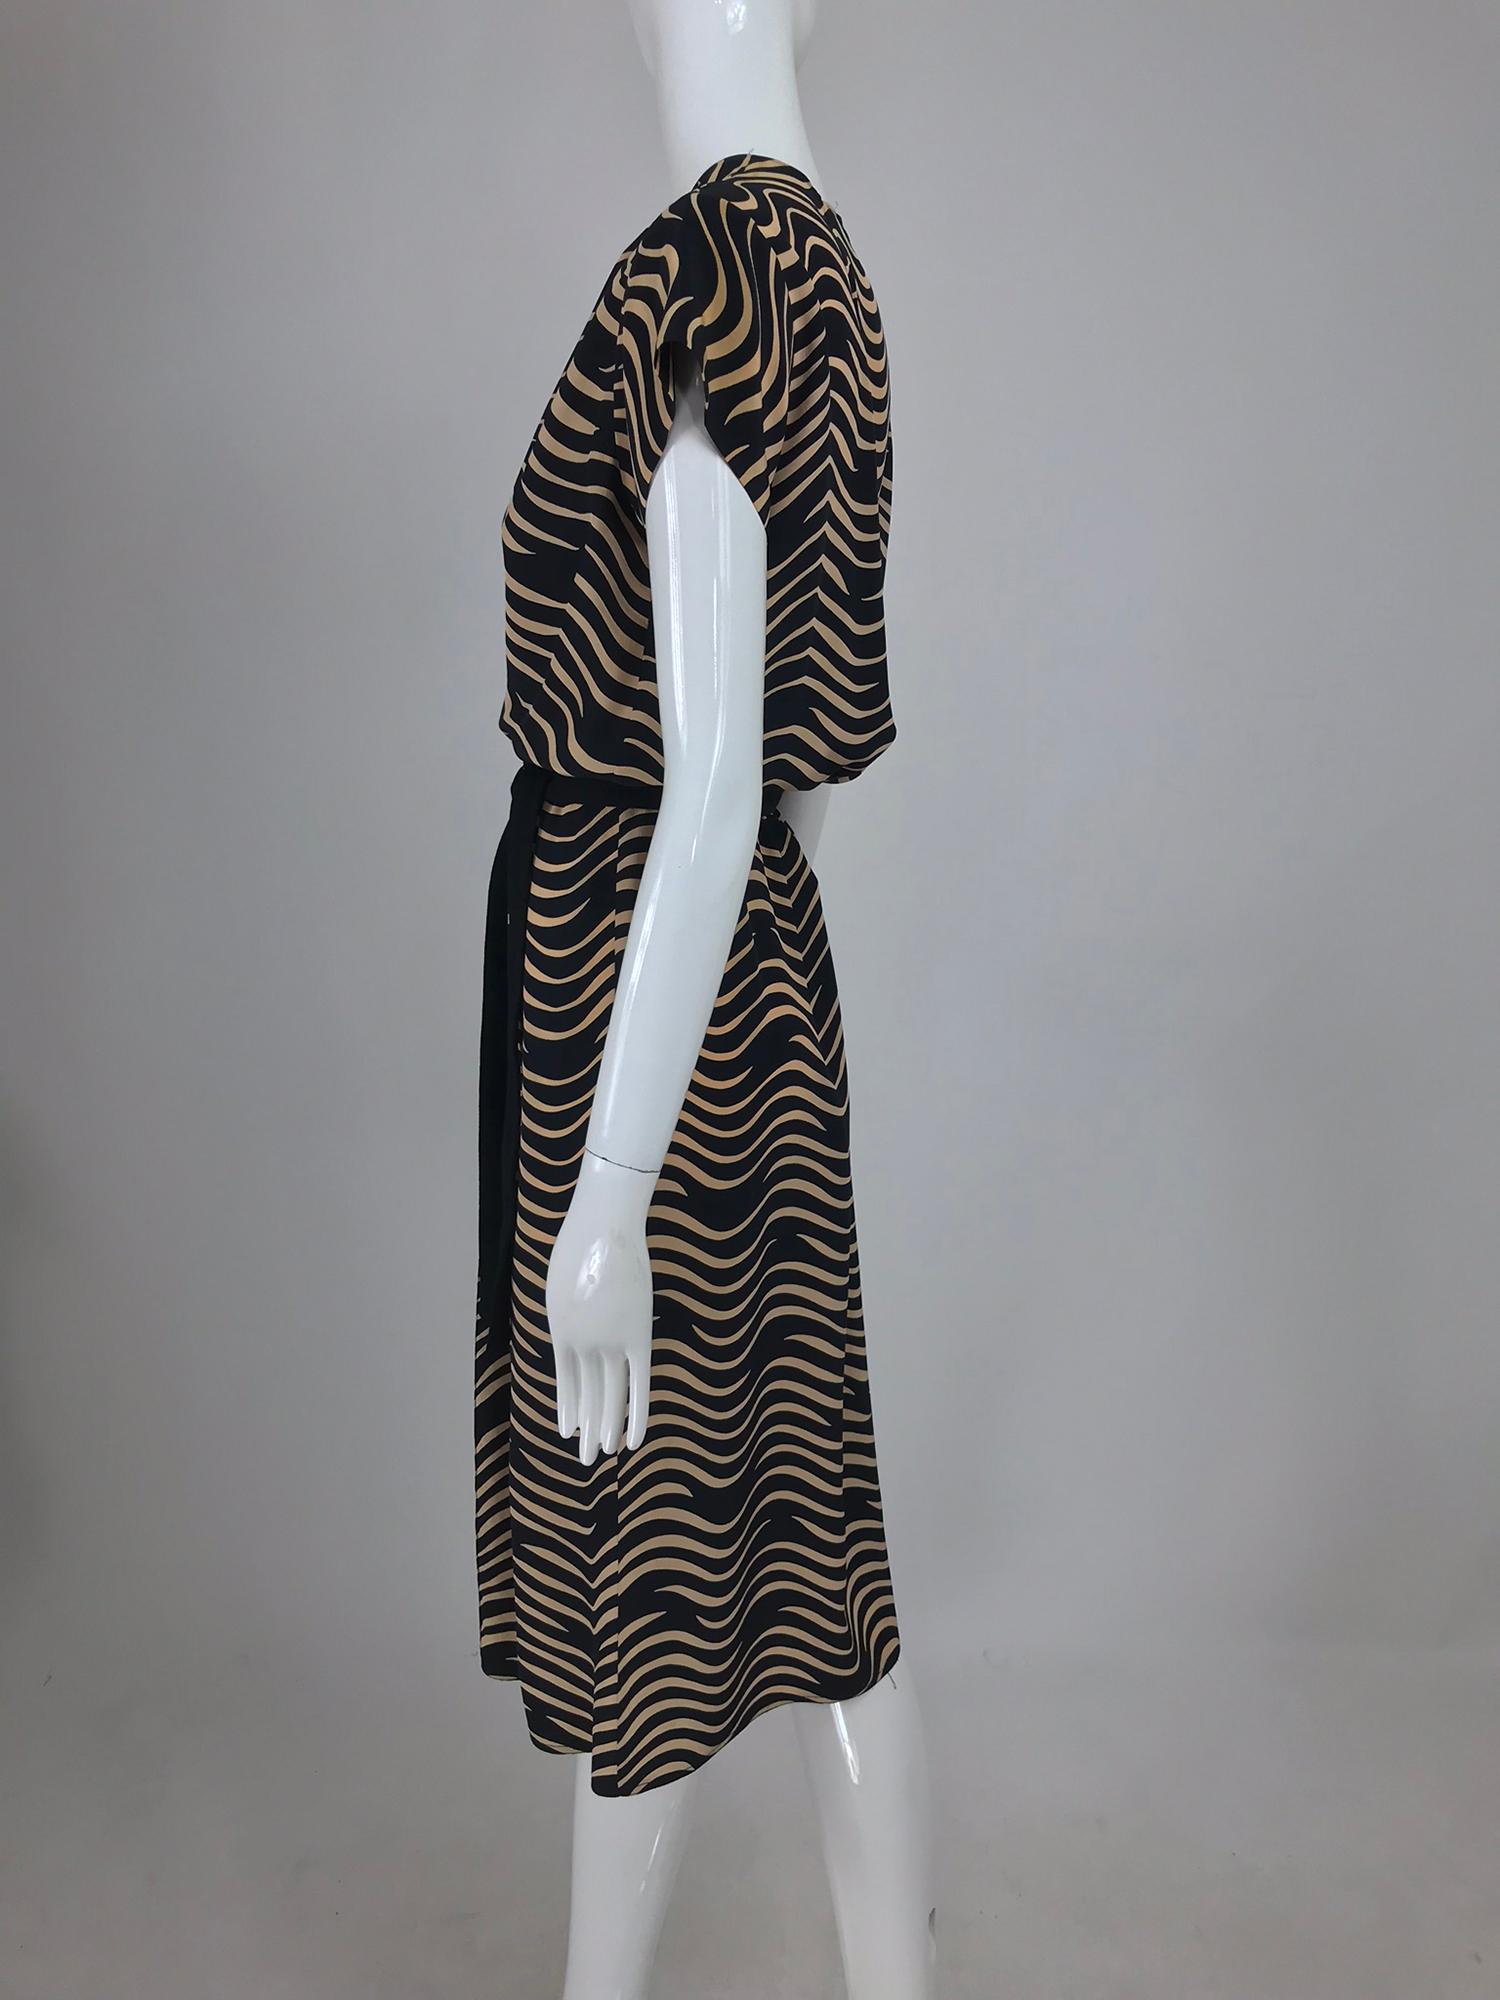 Women's Charivari Cigarette Smoke Silk Dress 1970s